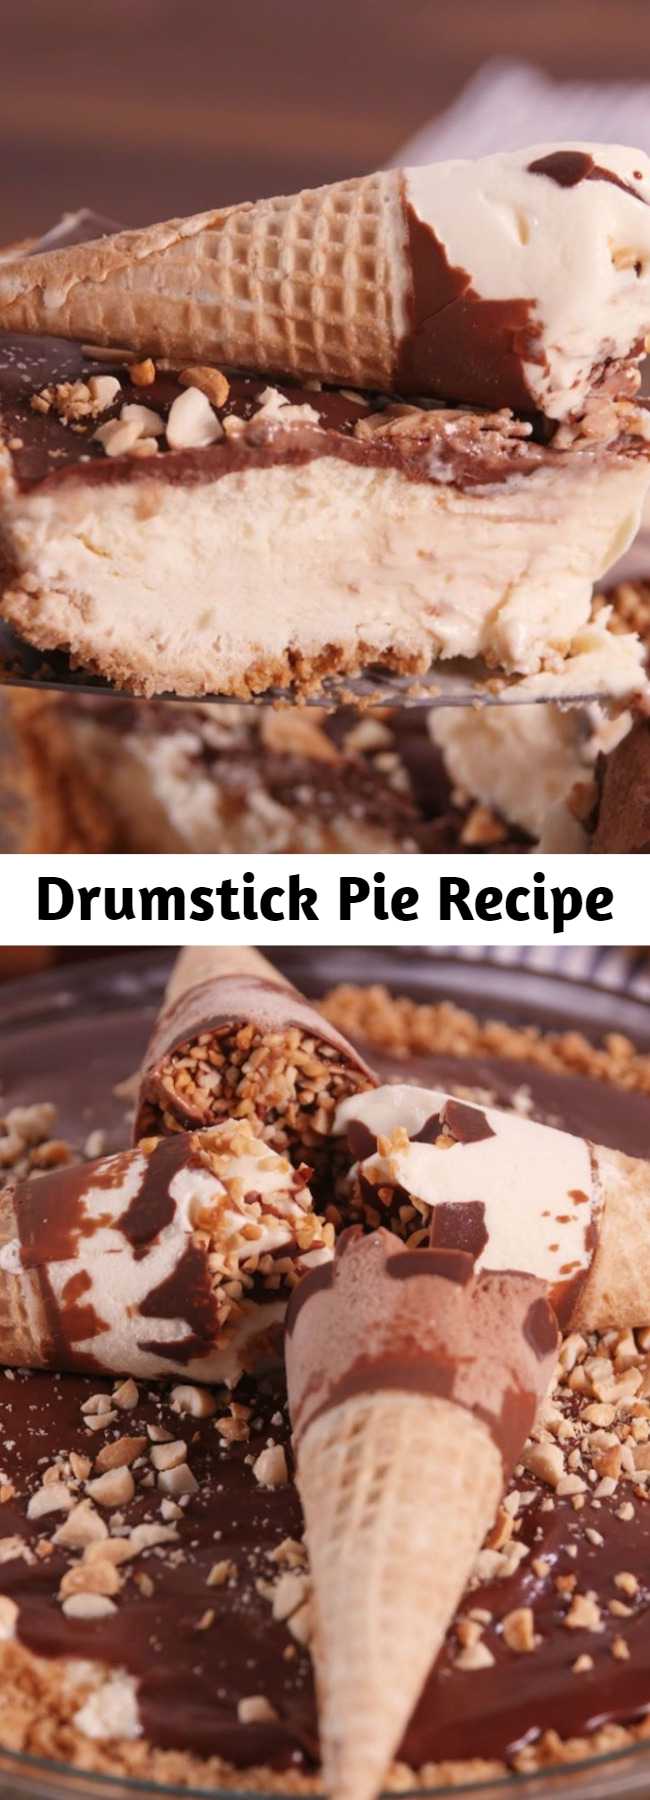 Drumstick Pie Recipe - The sugar cone crust on this Drumstick pie is pure genius. Never sick of Drumsticks.